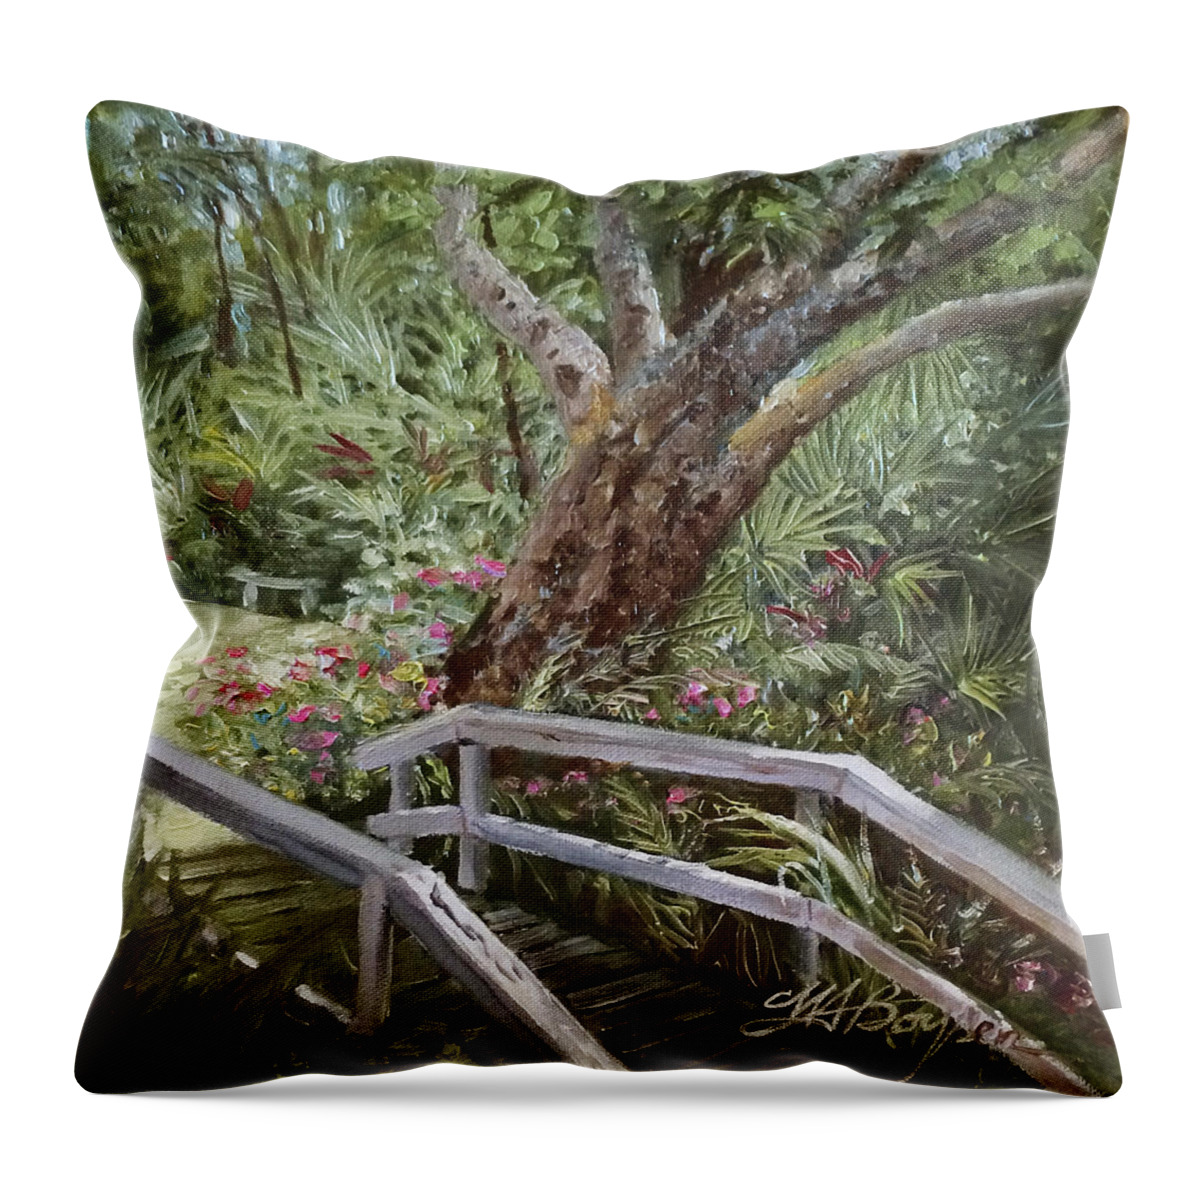 Tropical Garden Throw Pillow featuring the painting Tropical Garden by Maryann Boysen